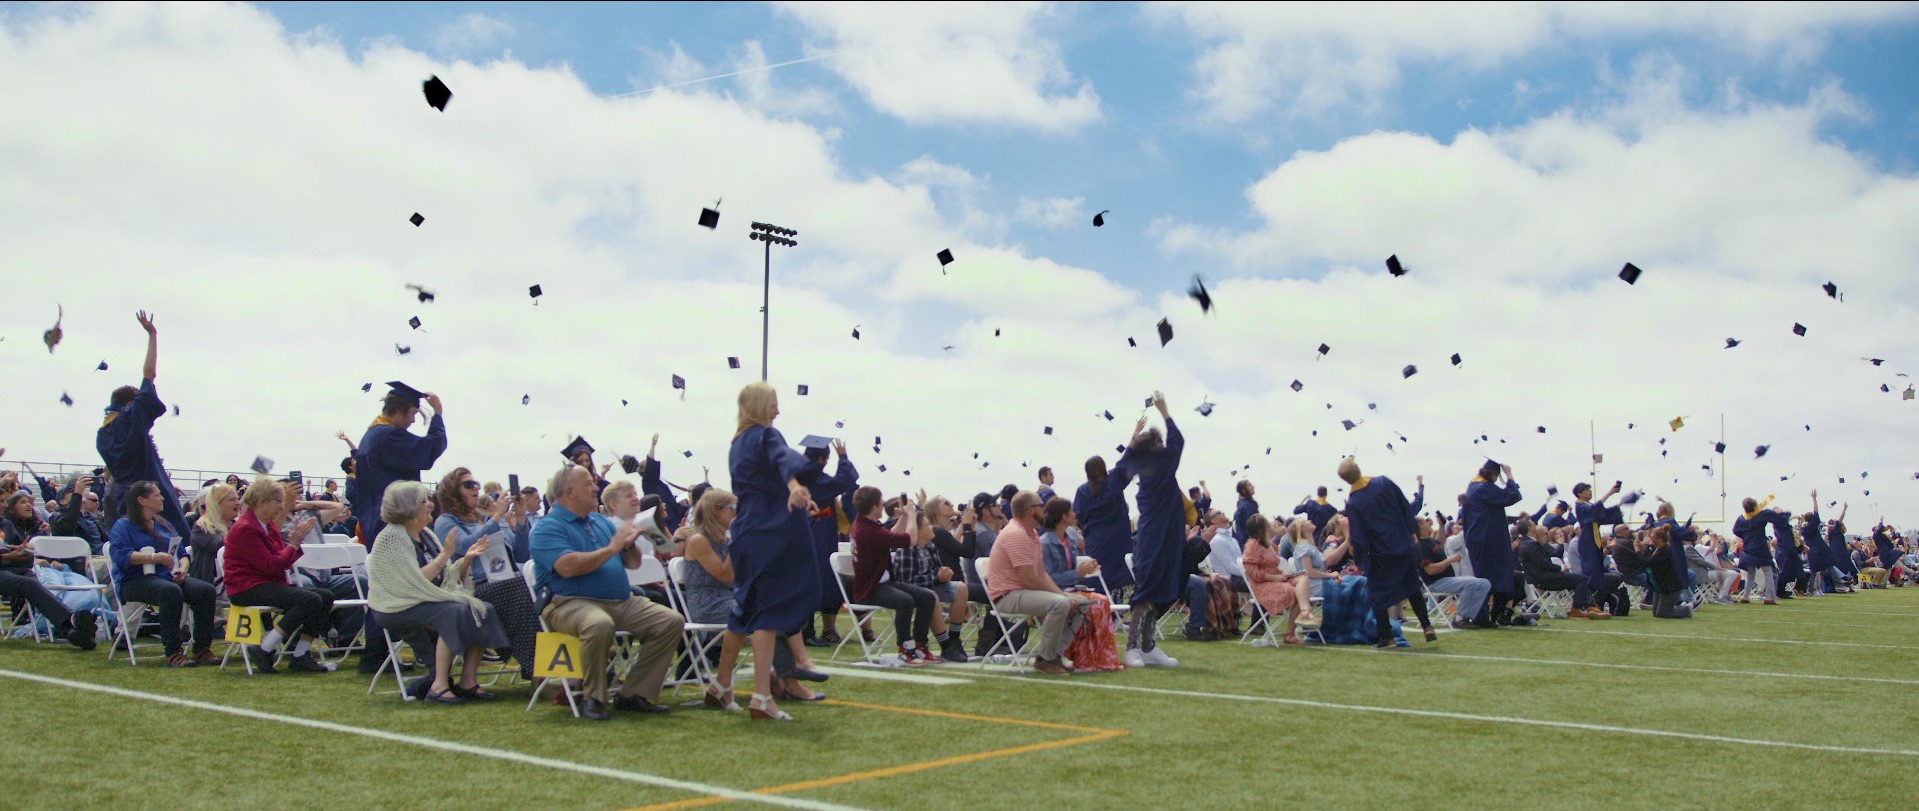 Frederick High School Graduates throwing their graduation caps